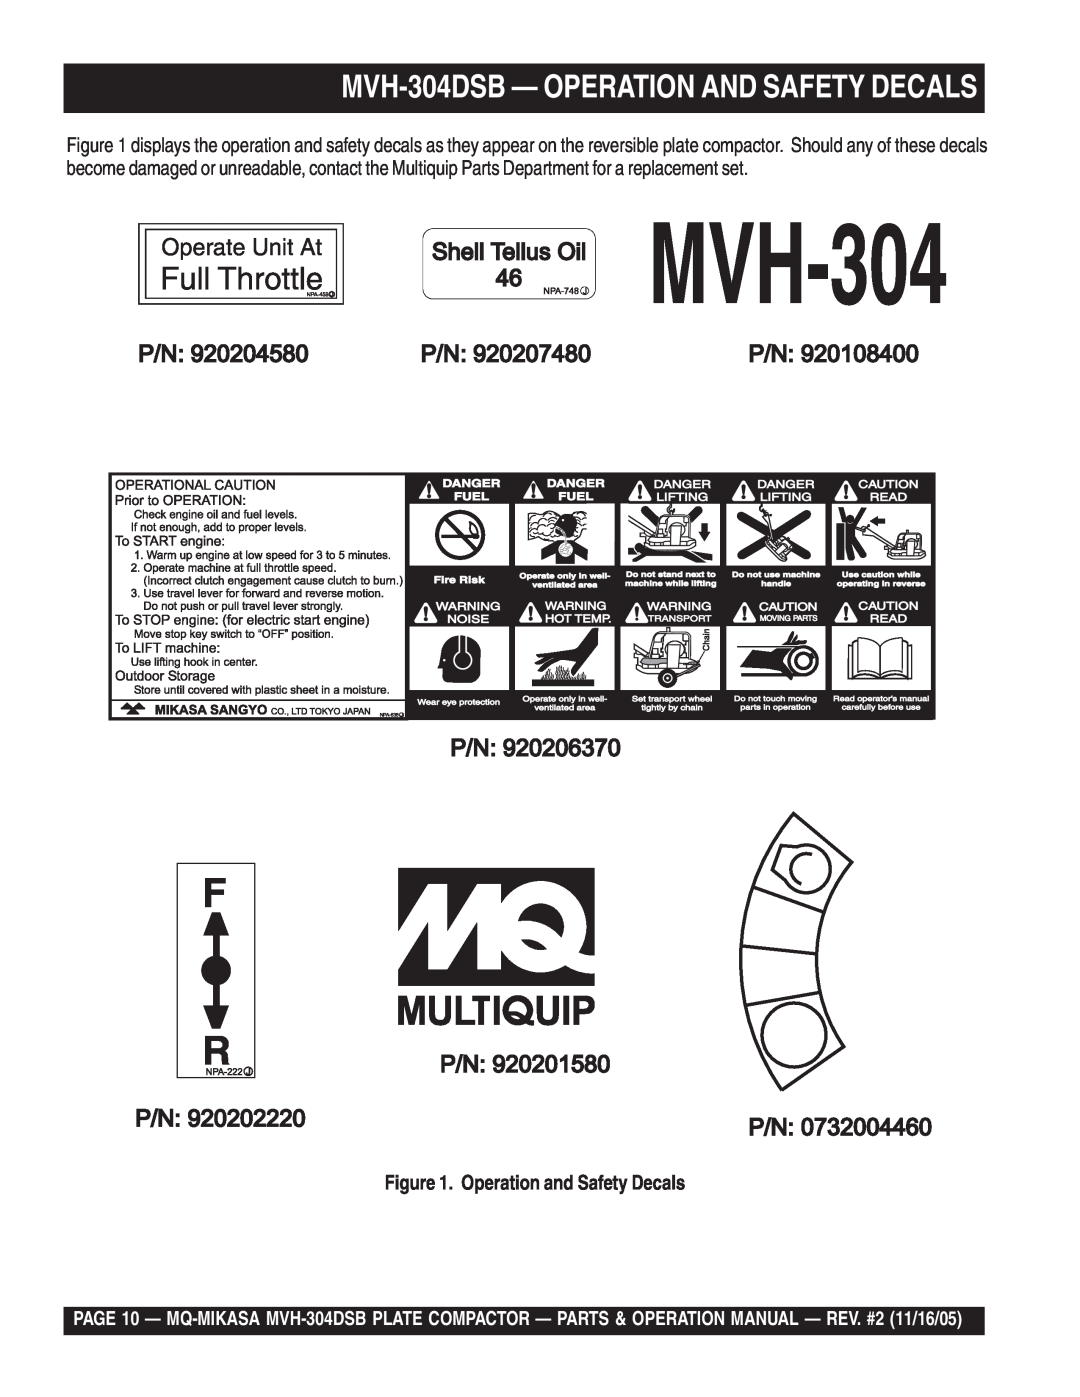 Multiquip operation manual MVH-304DSB - OPERATION AND SAFETY DECALS, Operation and Safety Decals 